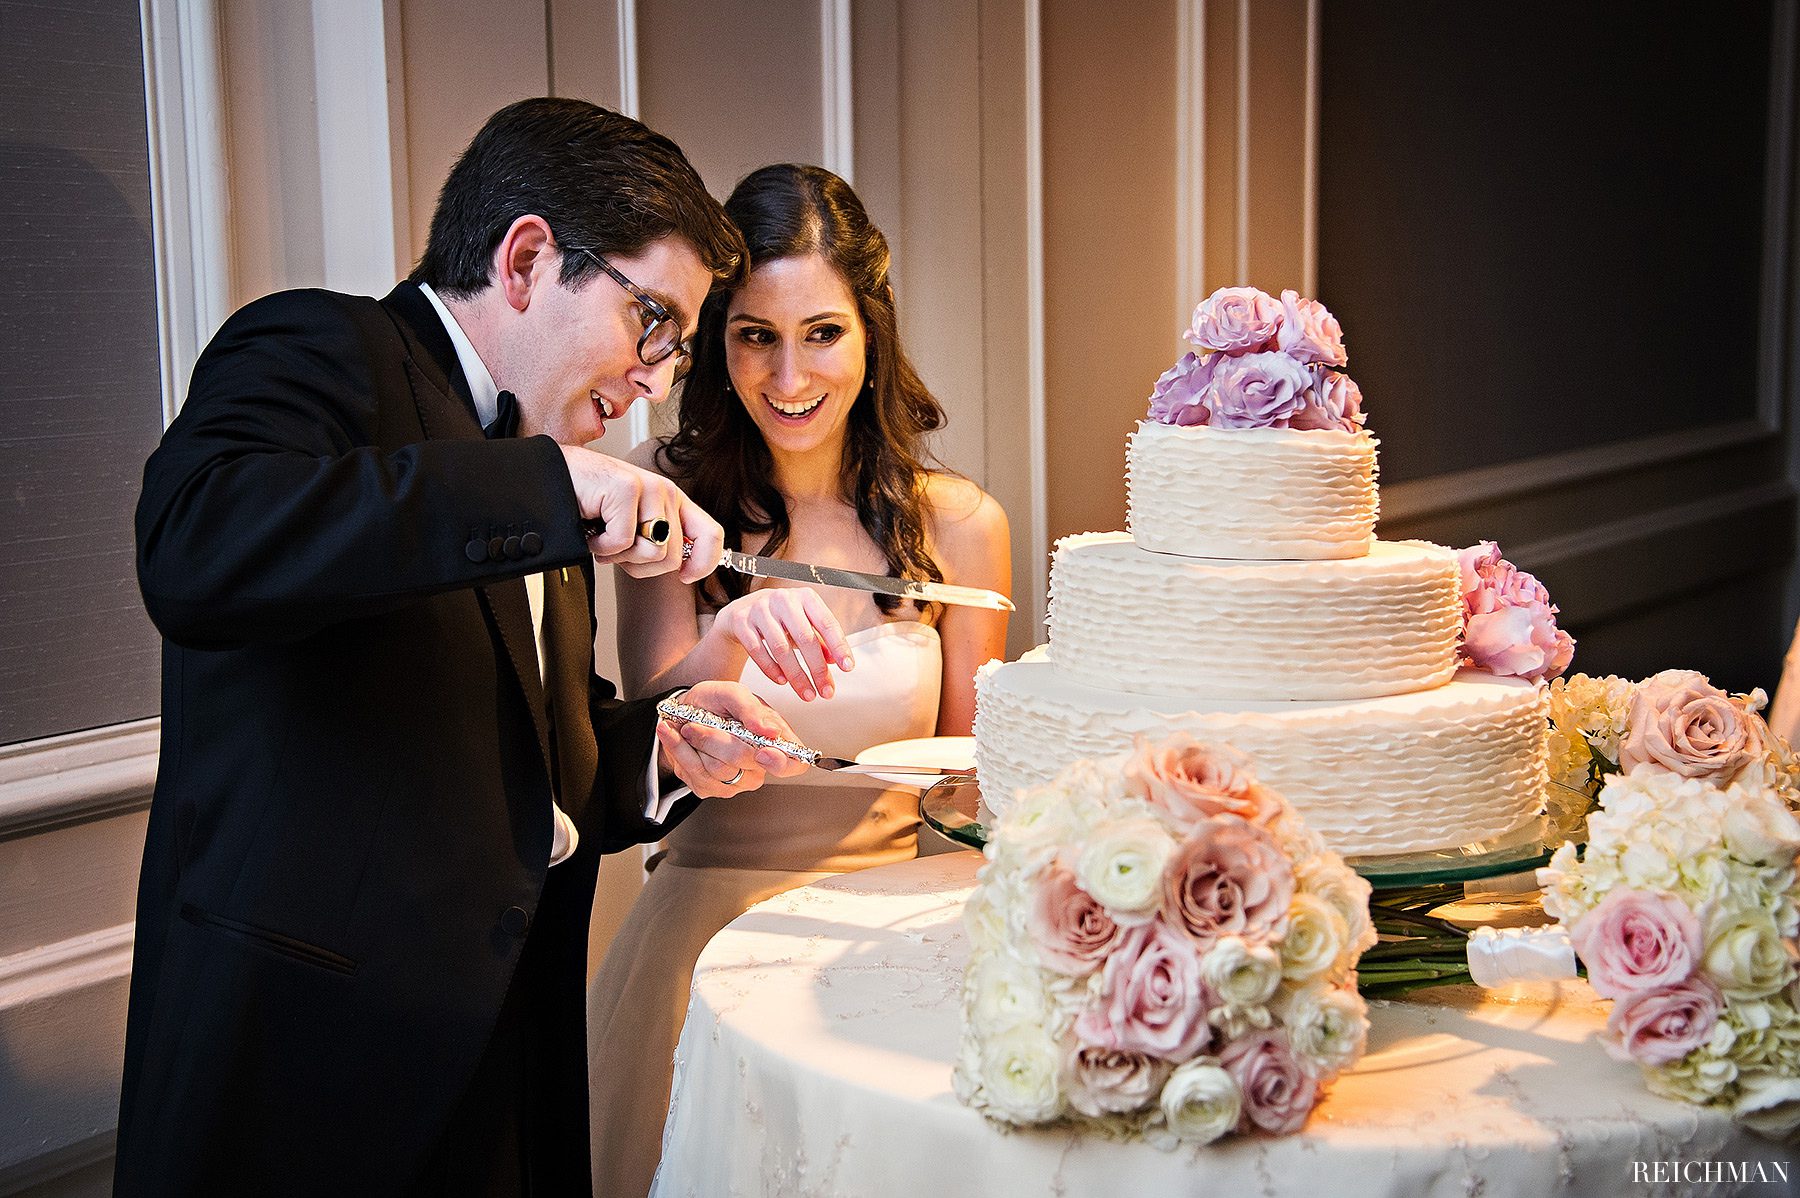 064_HH_Desserts_Atlanta_Wedding_Cake